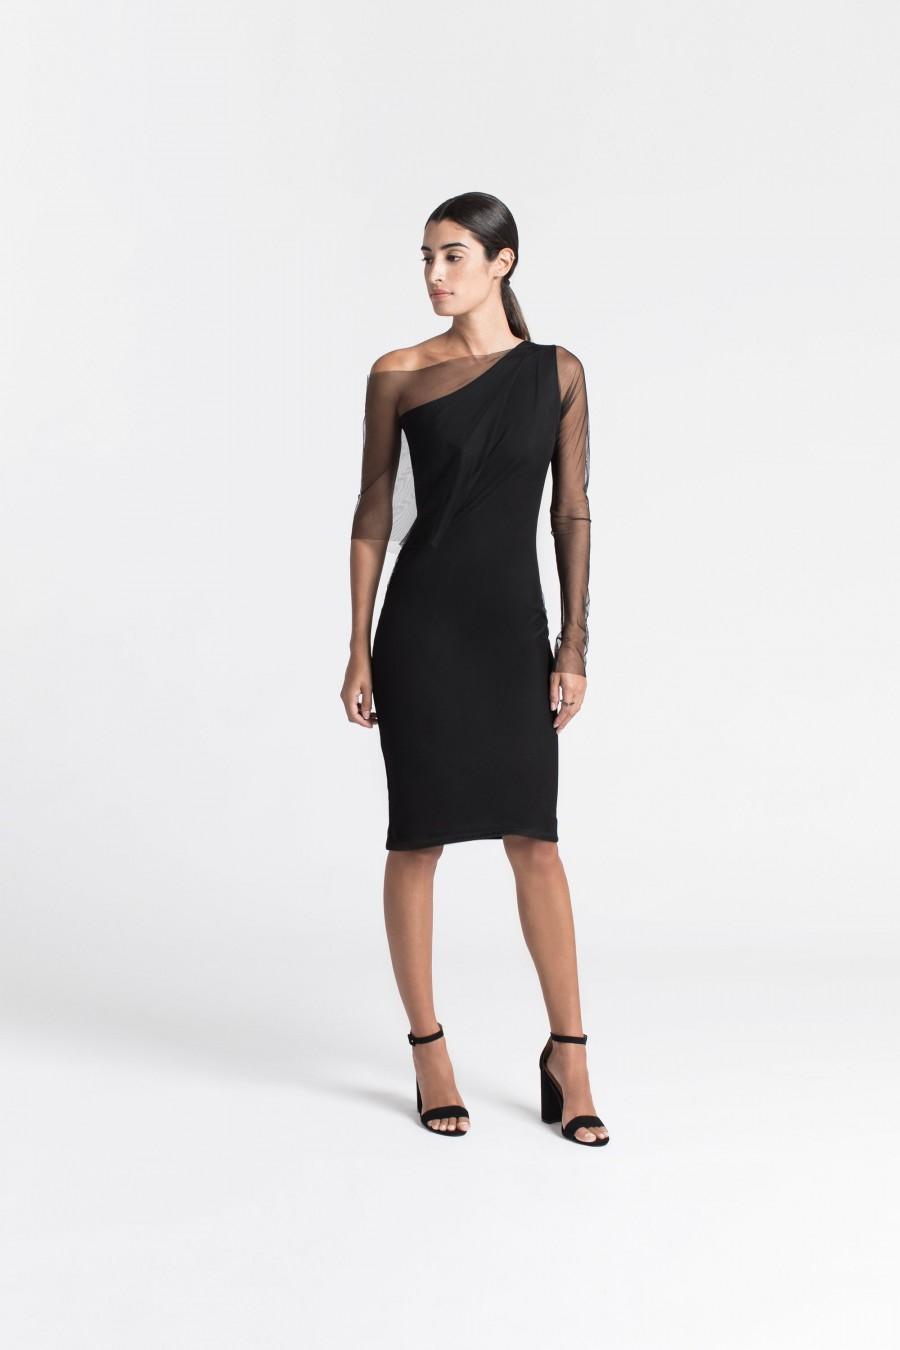 زفاف - NEW Pencil Dress / Black Dress / One Shoulder Dress / Party Dress / Cocktail Dress / Scarlett Dress / Marcellamoda - MD1010